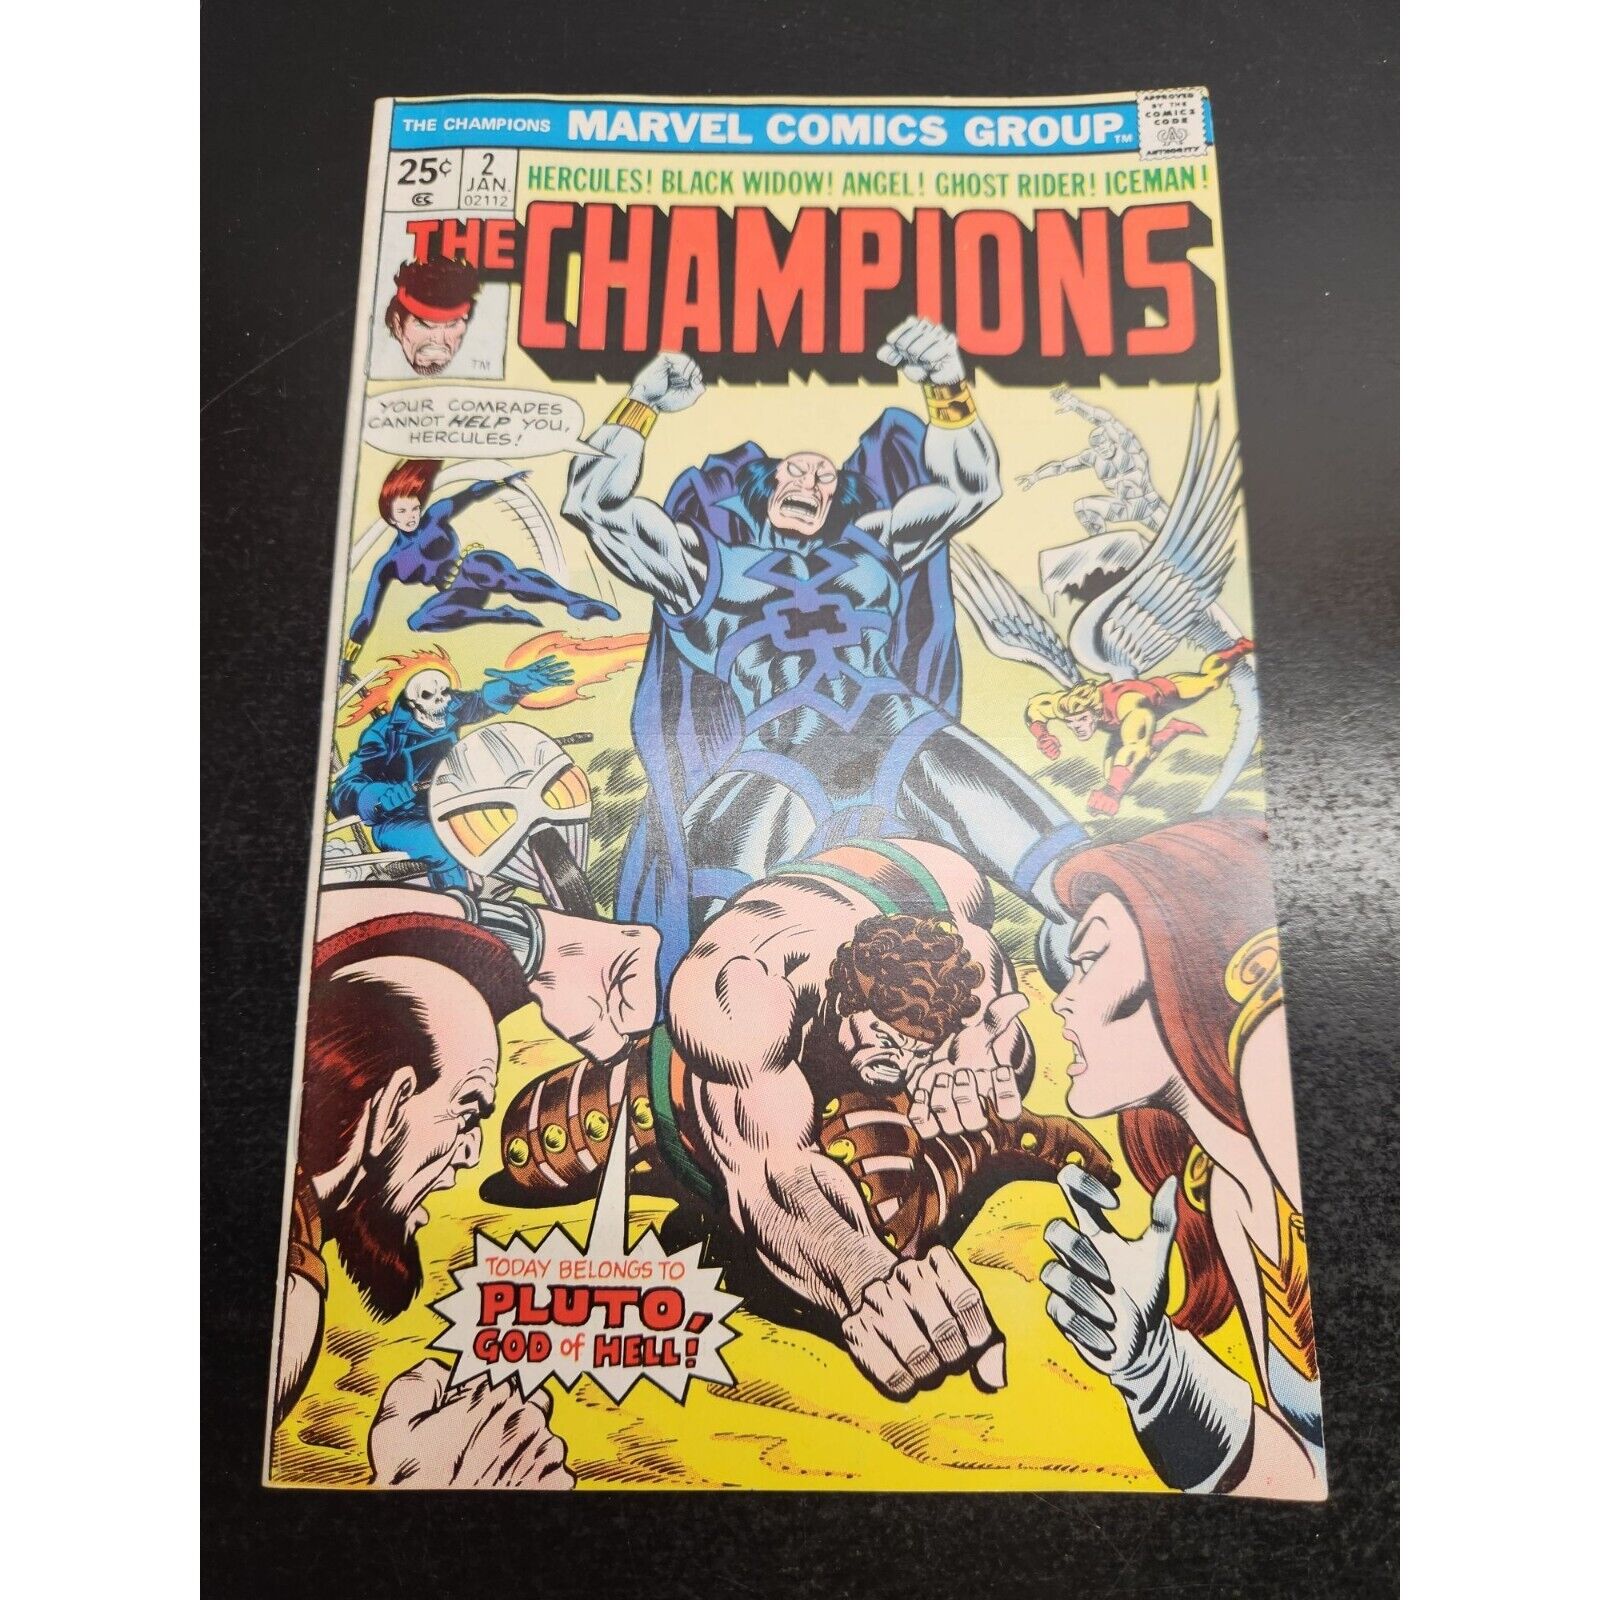 Marvel Comics The Champions #9 January 1977 - Hercules -Black Widow-Ghostrider